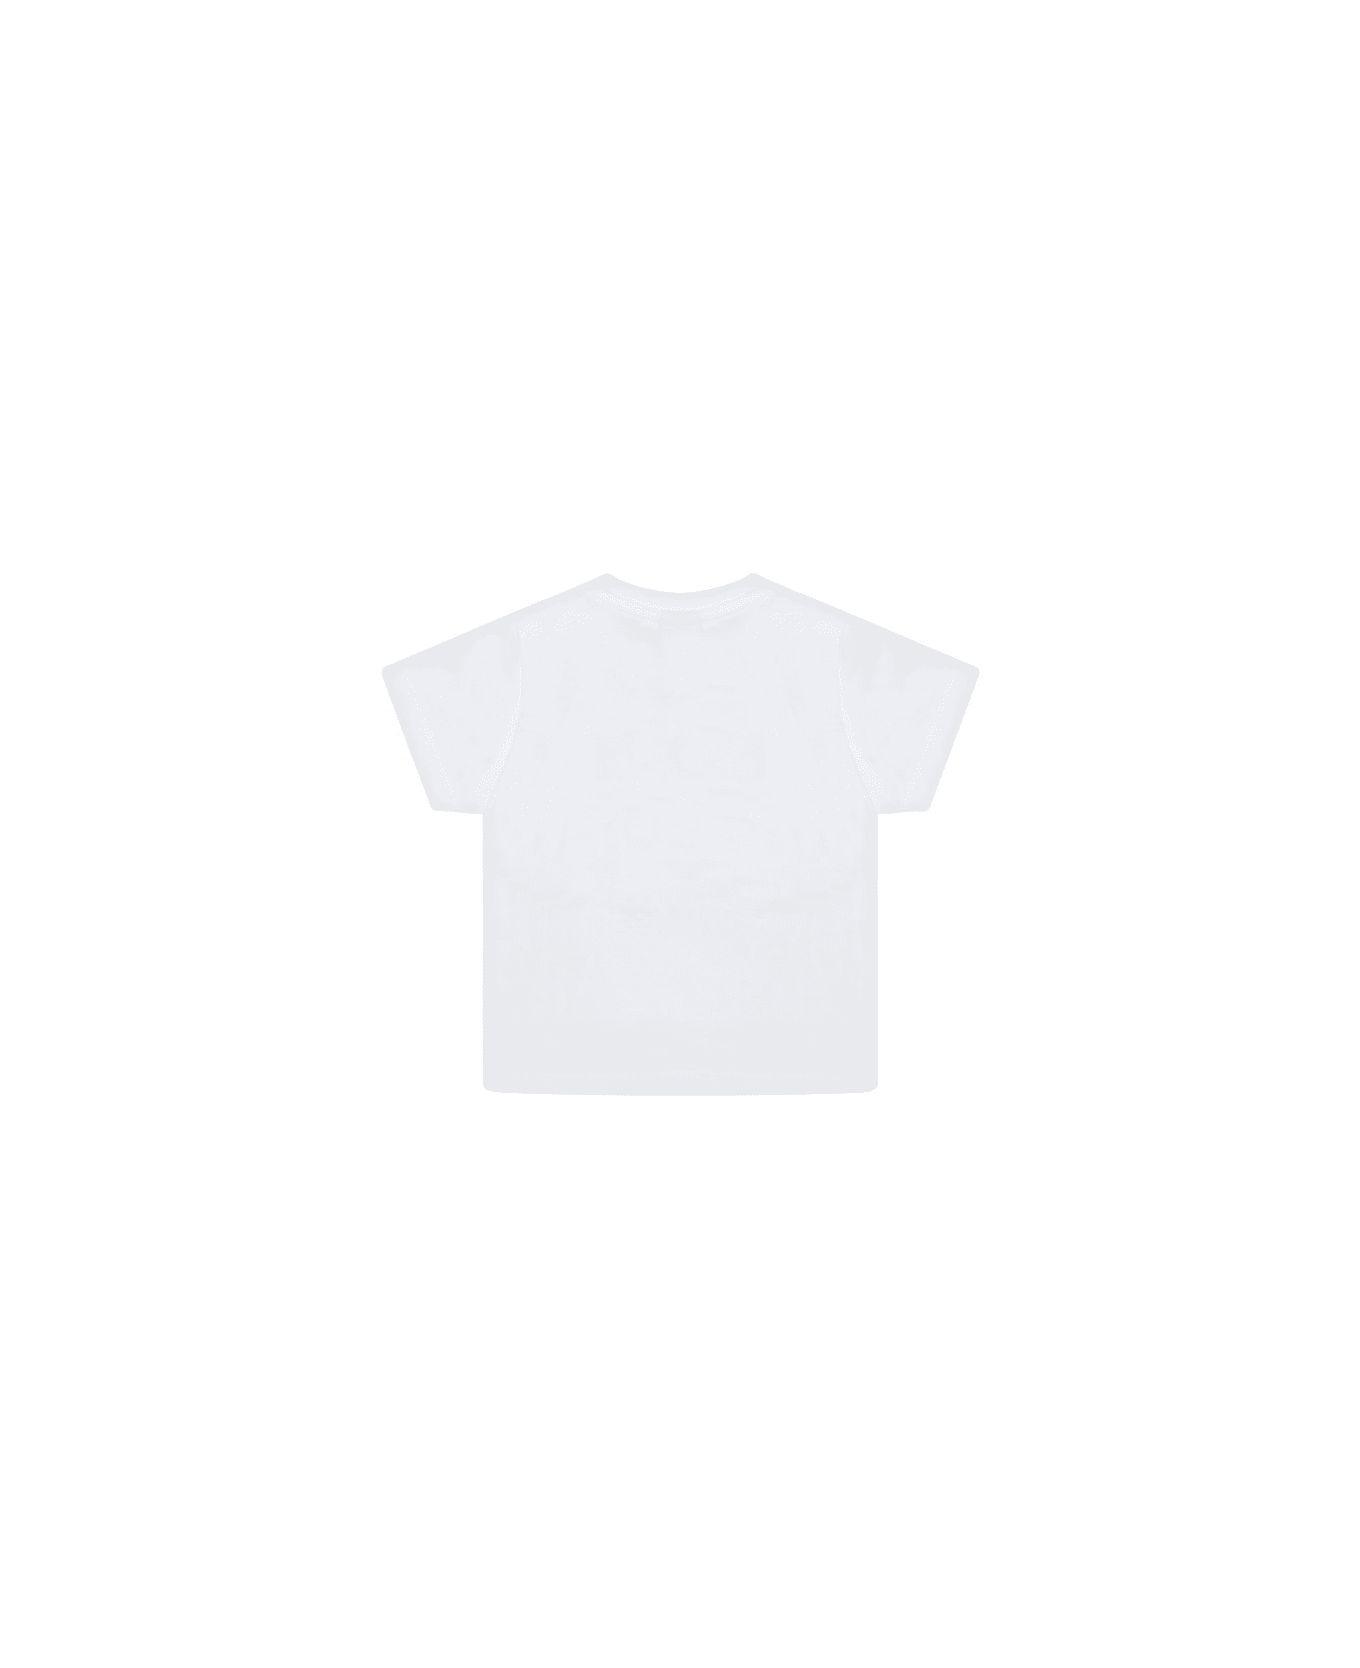 Hugo Boss Printed T-shirt - White